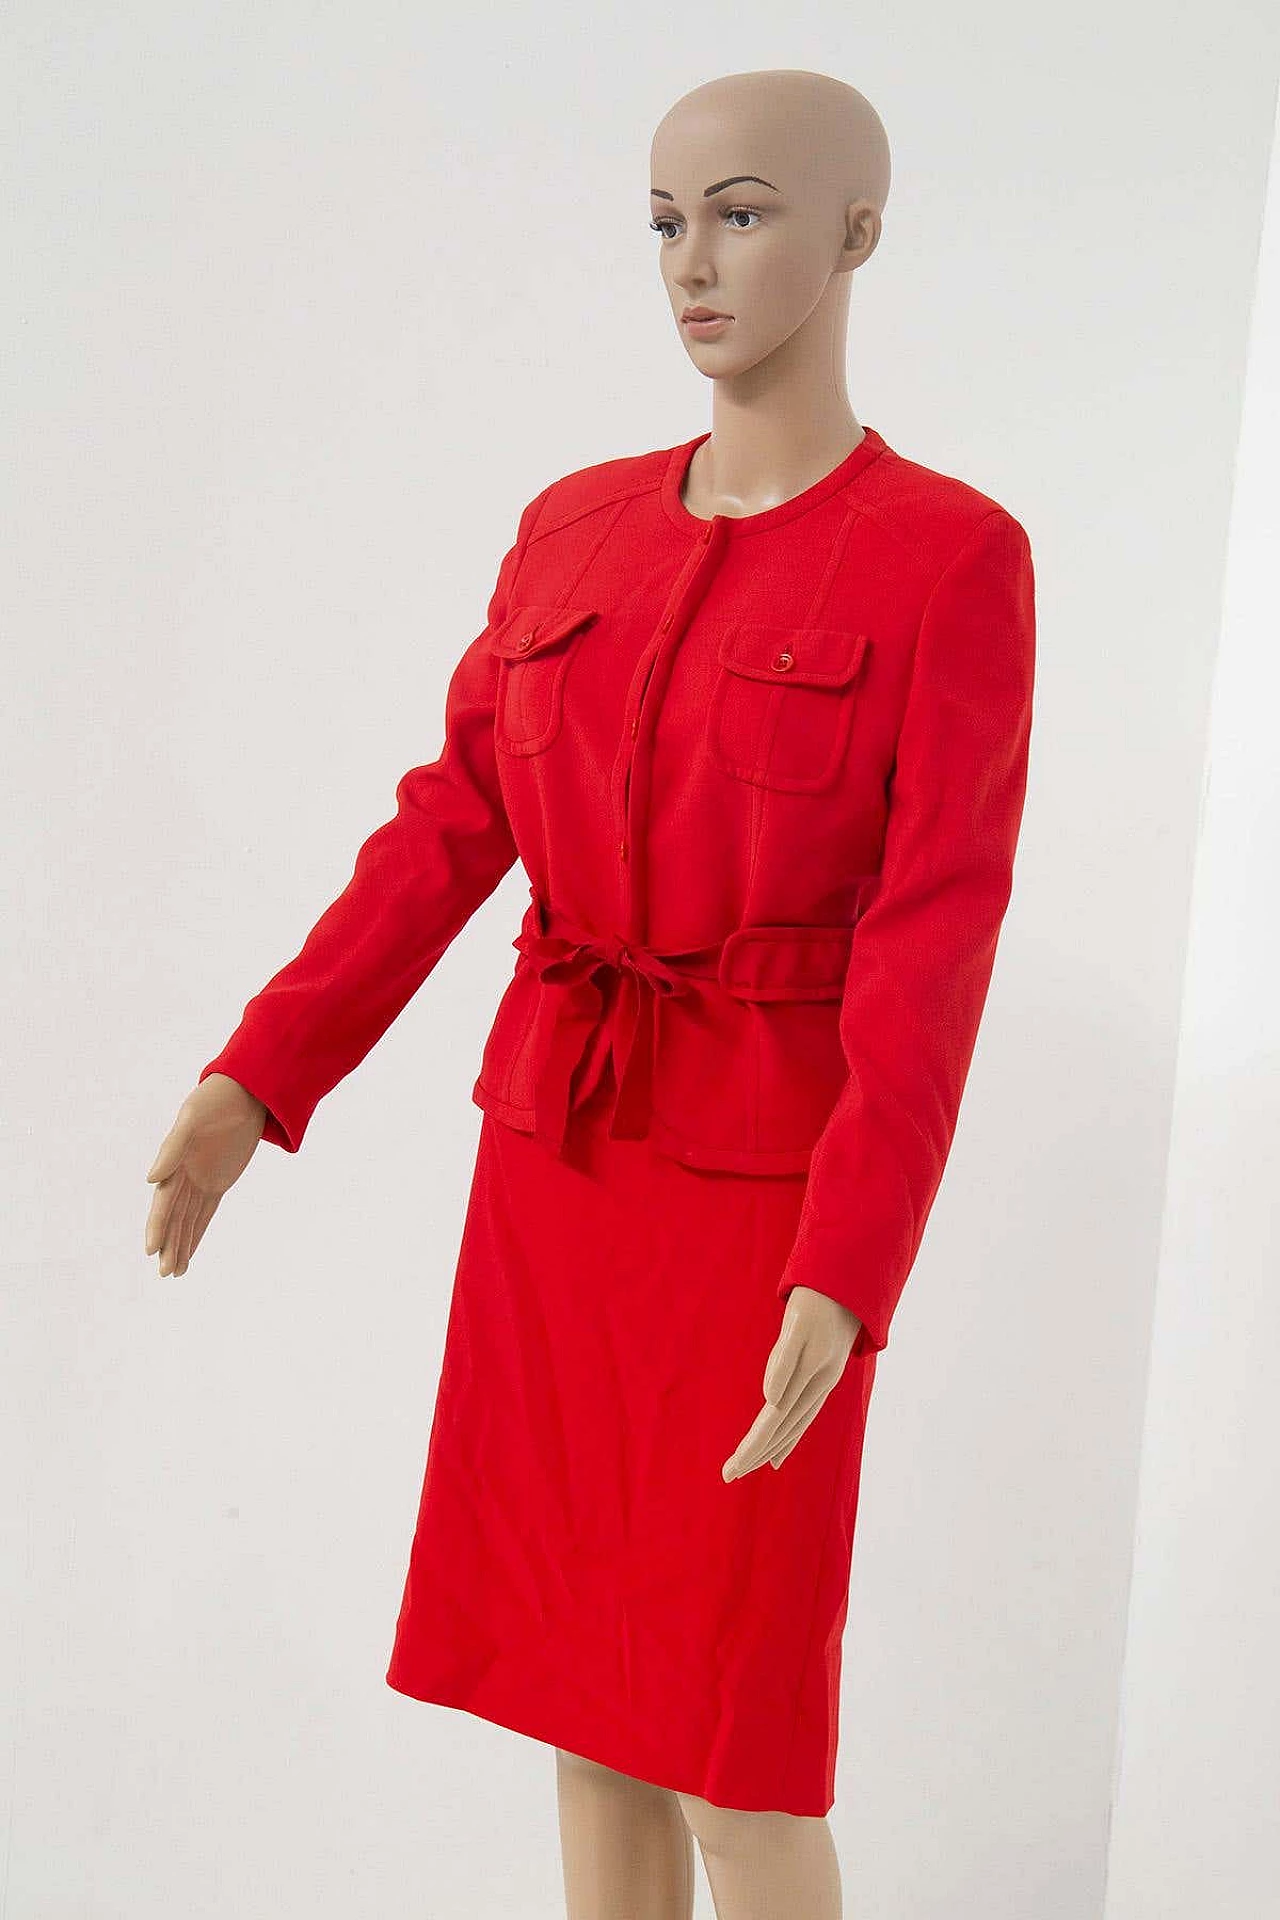 Red sheath dress by Valentino Garavani, 1990s 1